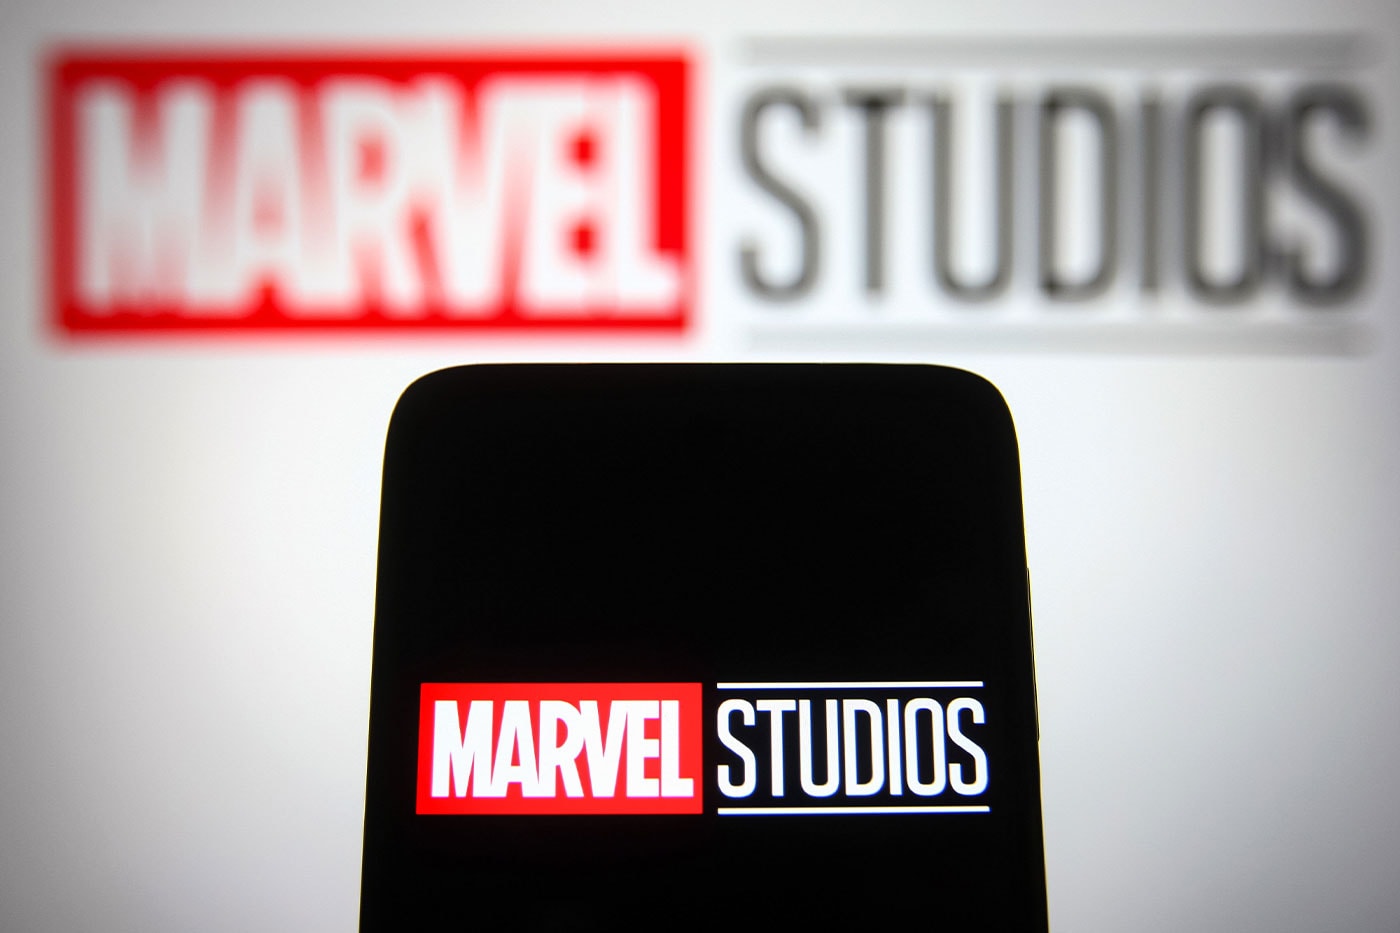 Disney to Cut Back on Marvel Films TV Shows Strategy Shift News Bob Iger Info